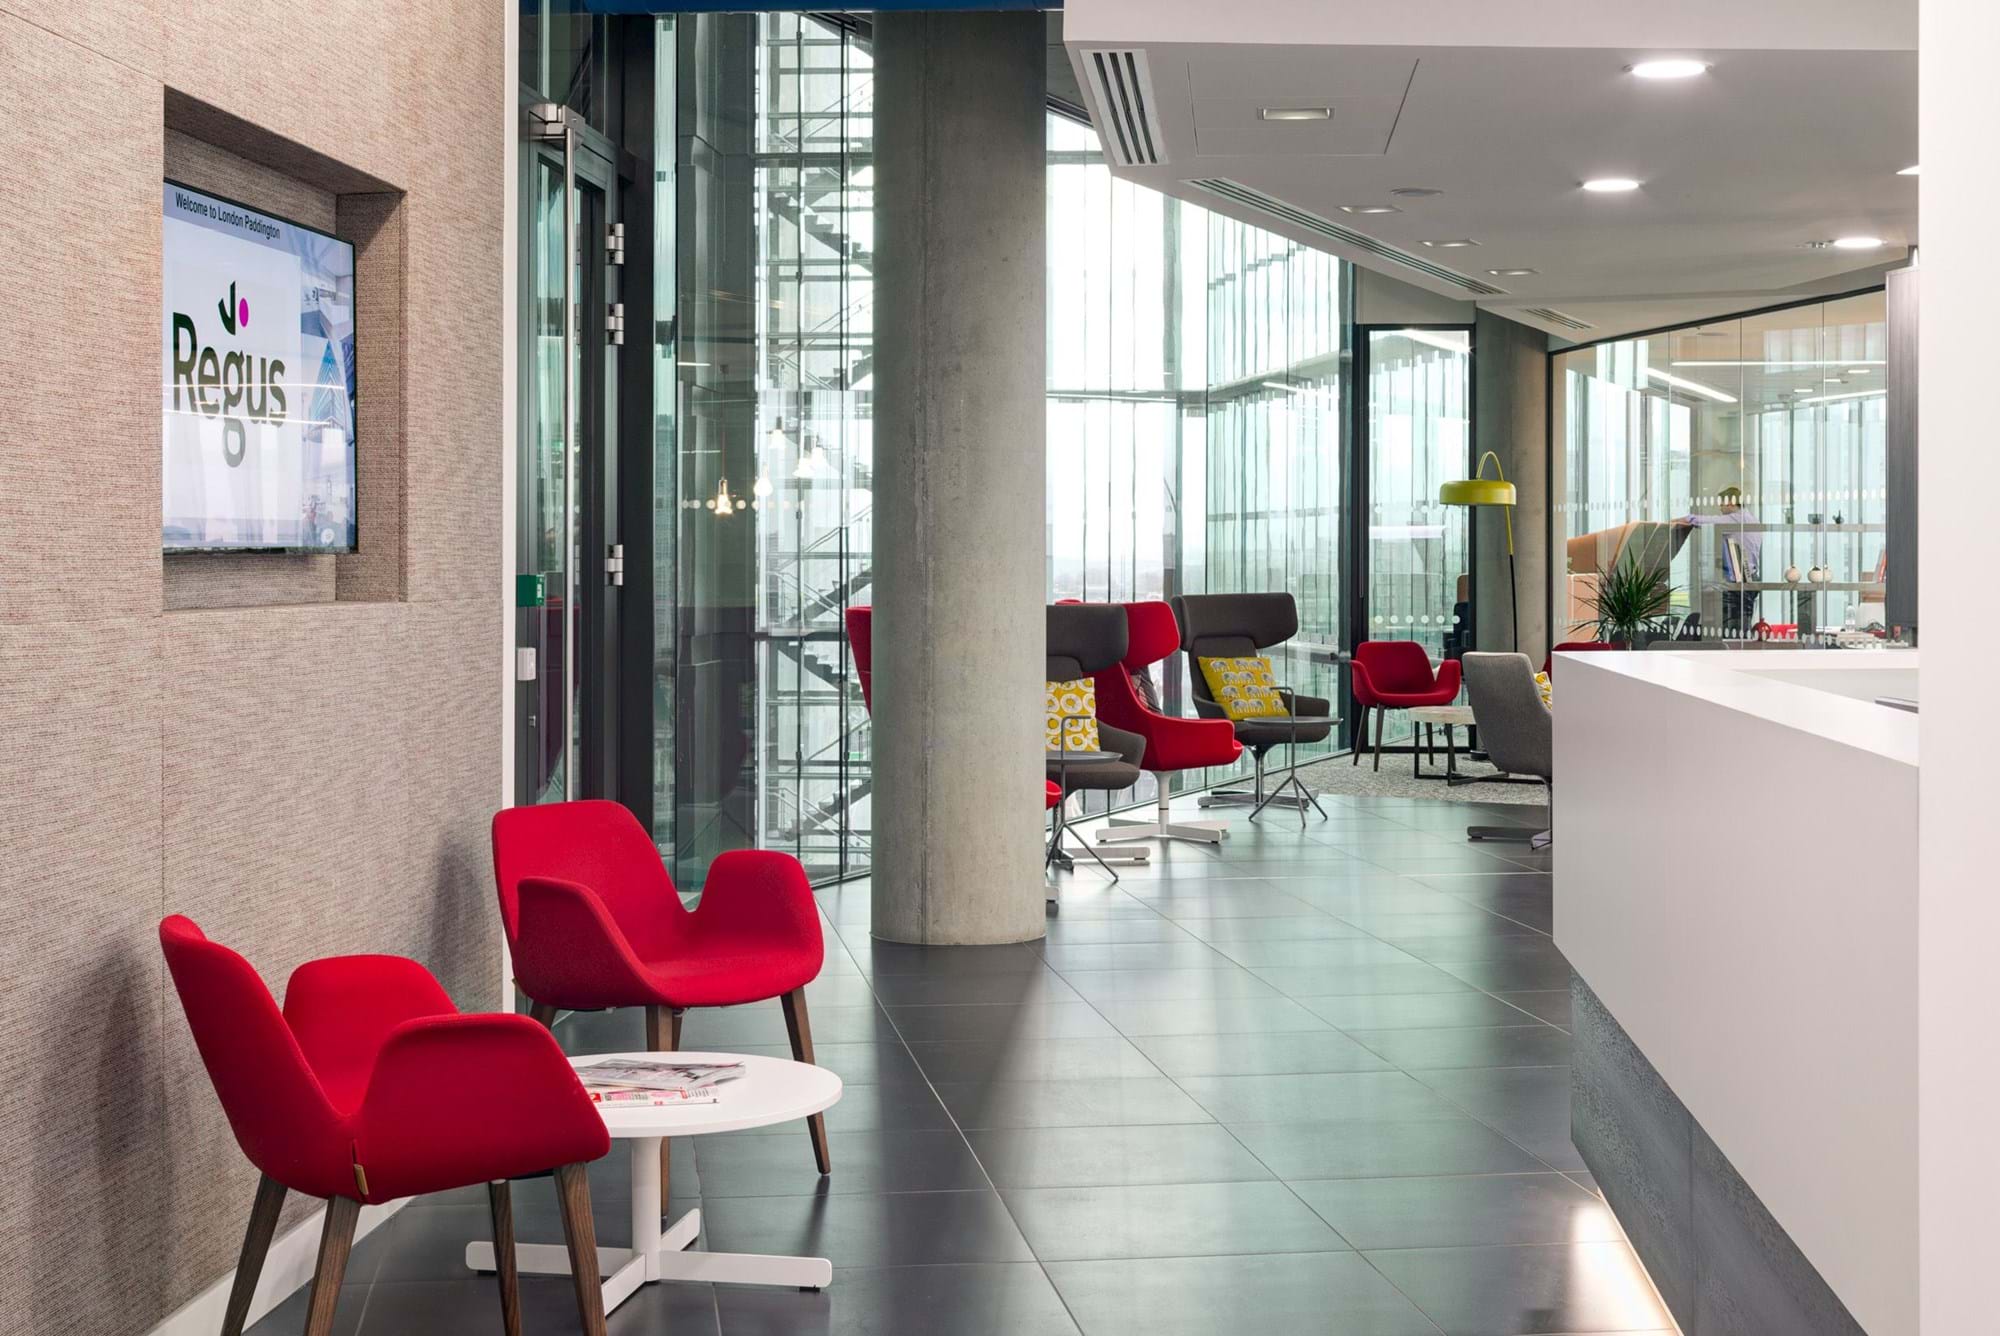 Modus Workspace office design, fit out and refurbishment - Regus Paddington - Reception - Regus paddington 01 highres sRGB.jpg